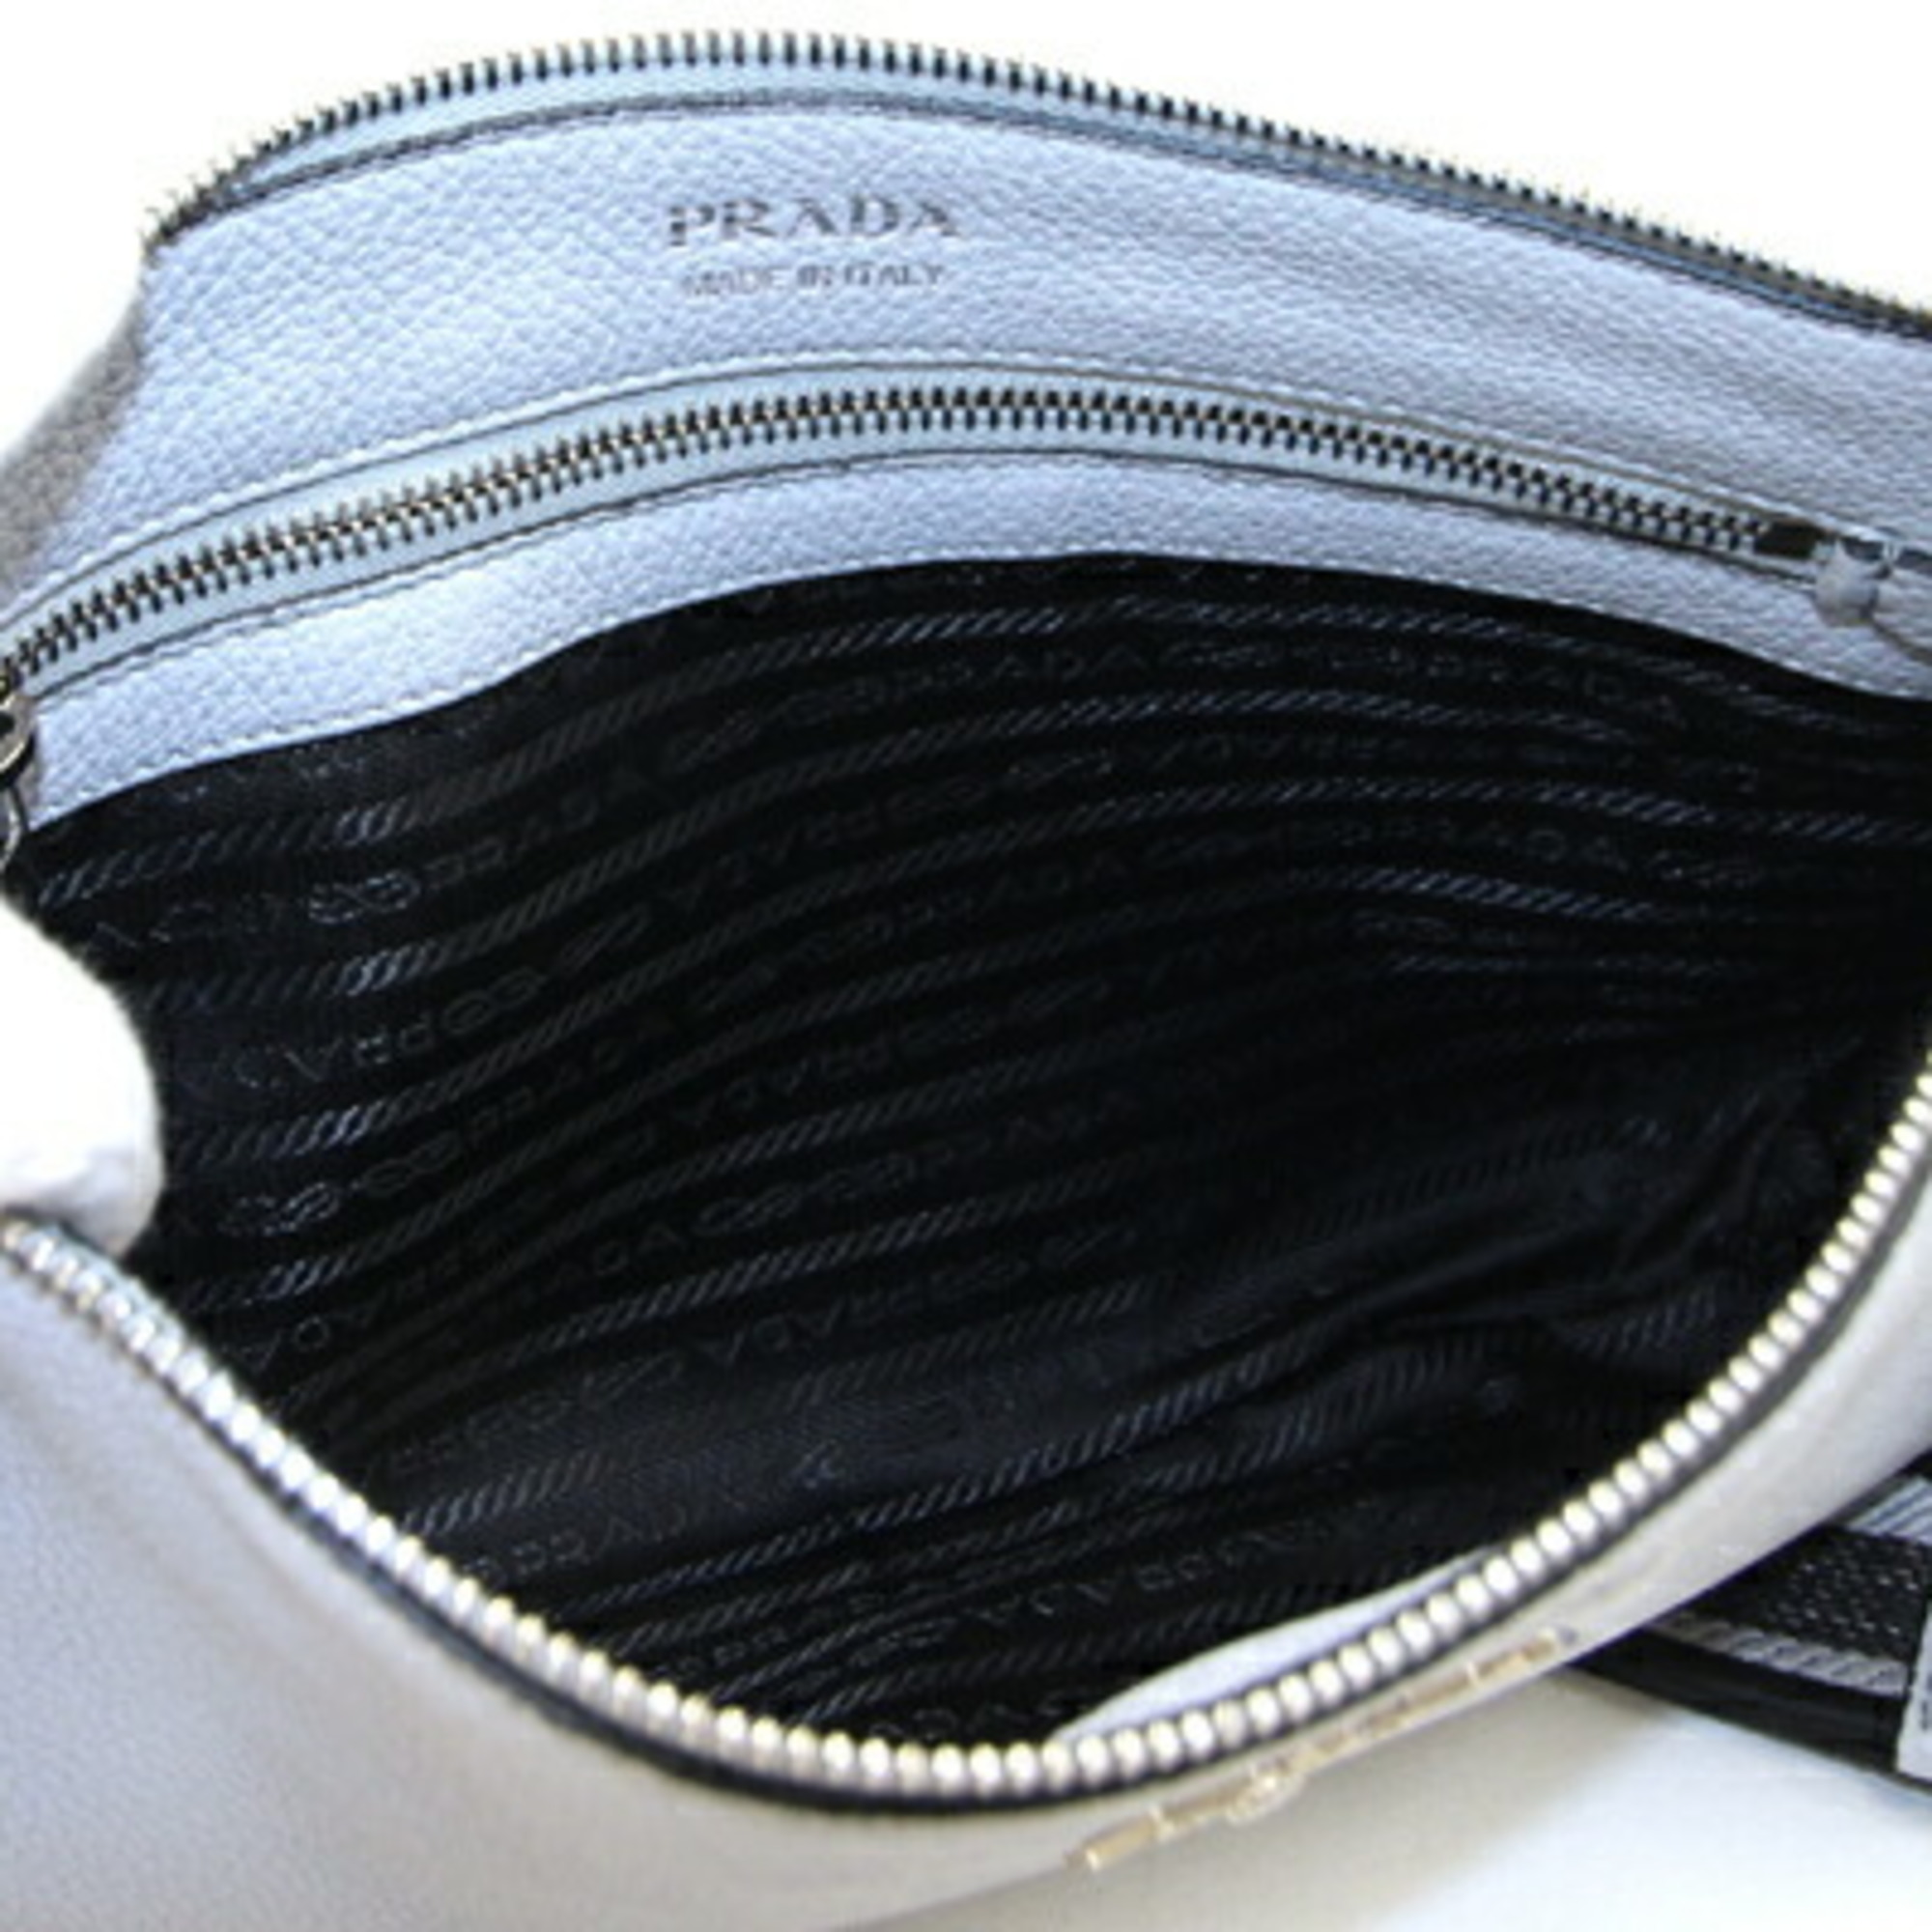 Prada Shoulder Bag 1BH050 Baby Blue FIORDALISO Leather Crossbody for Women PRADA